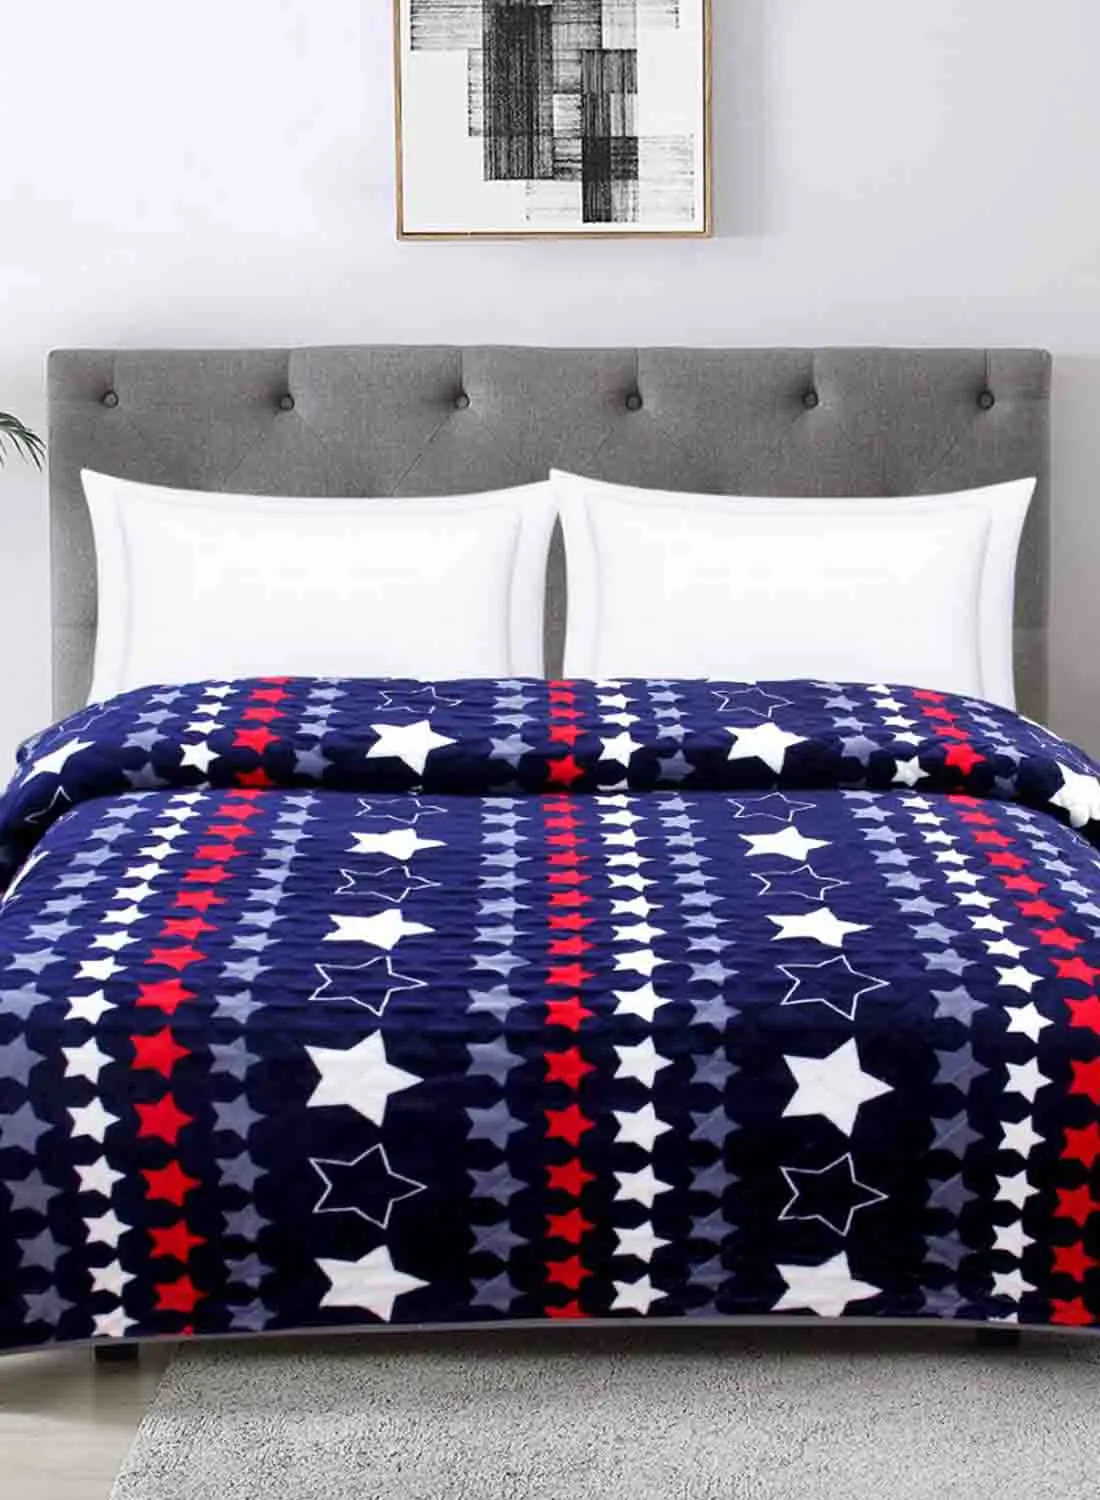 Hometown Light Blanket - Hometown - 76X100Cm - Floral -Ultra Plush For Sofa Or Bedroom